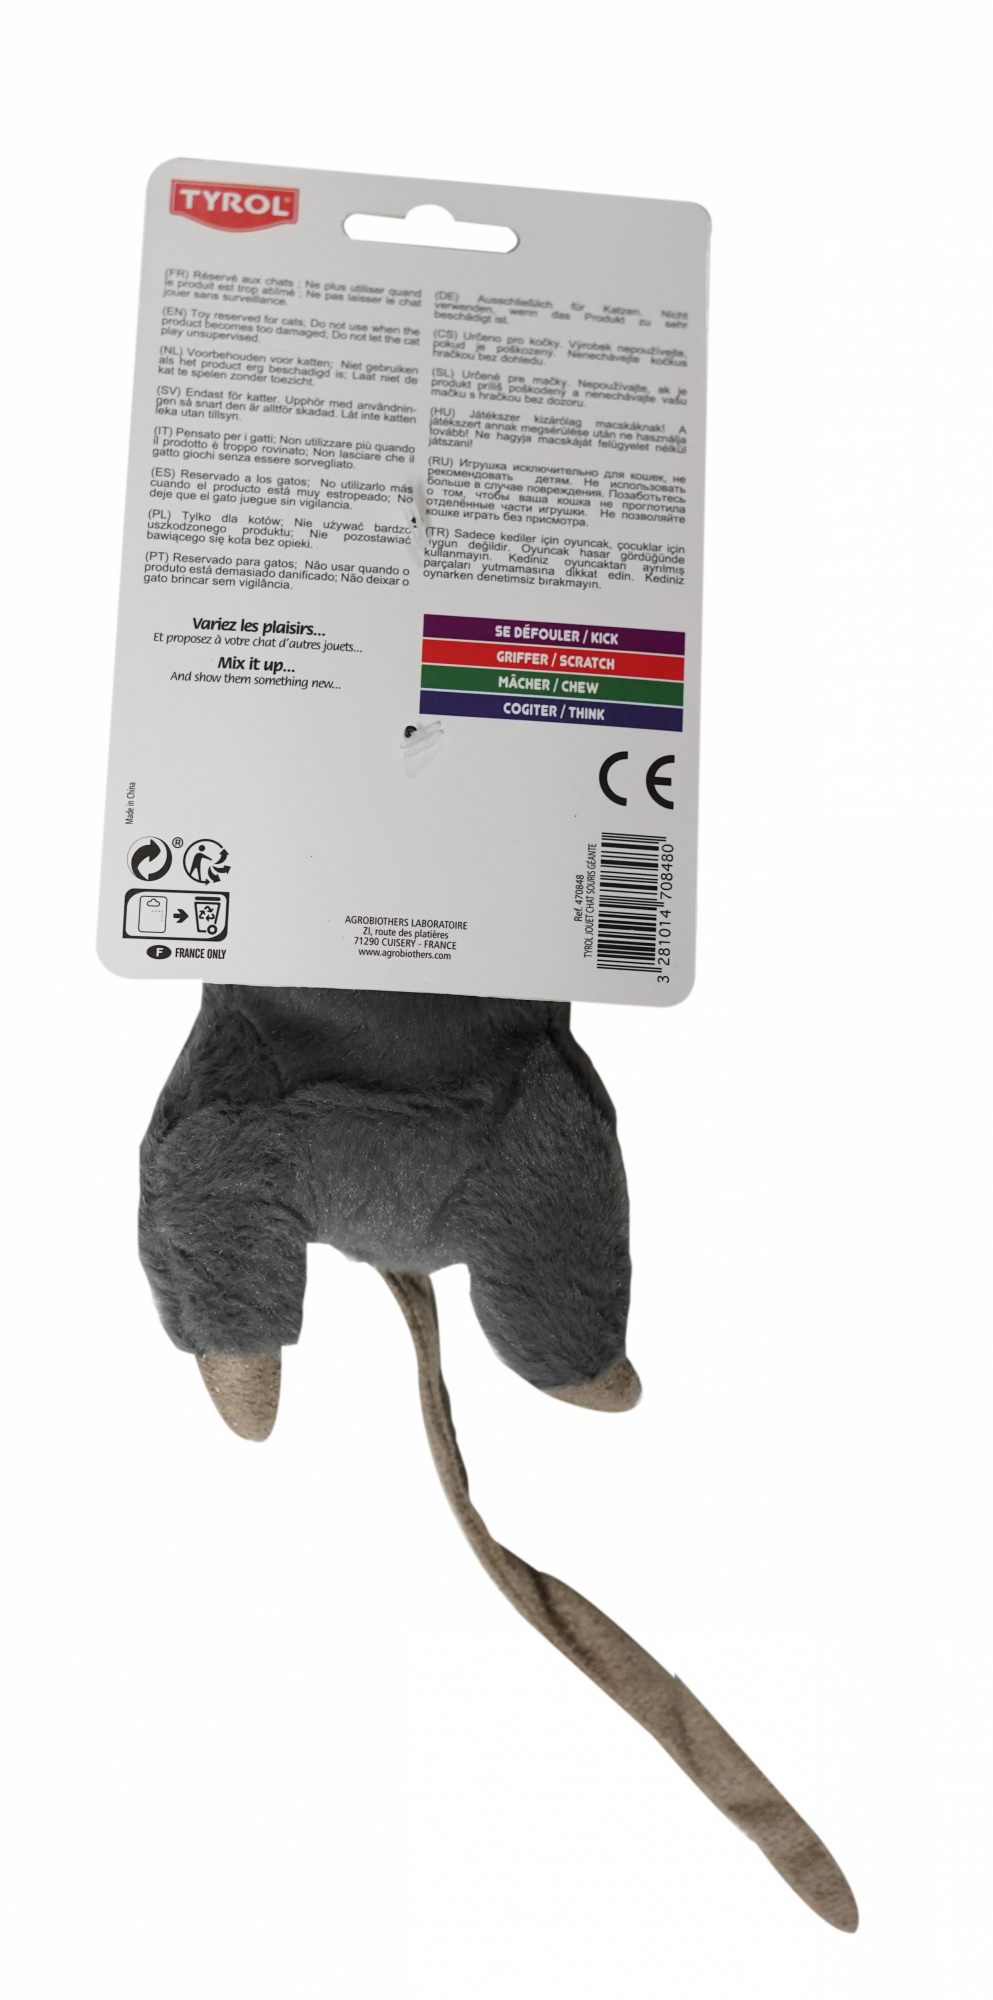 Topo gigante in peluche con carta Crinckle ed erba gatta Tyrol